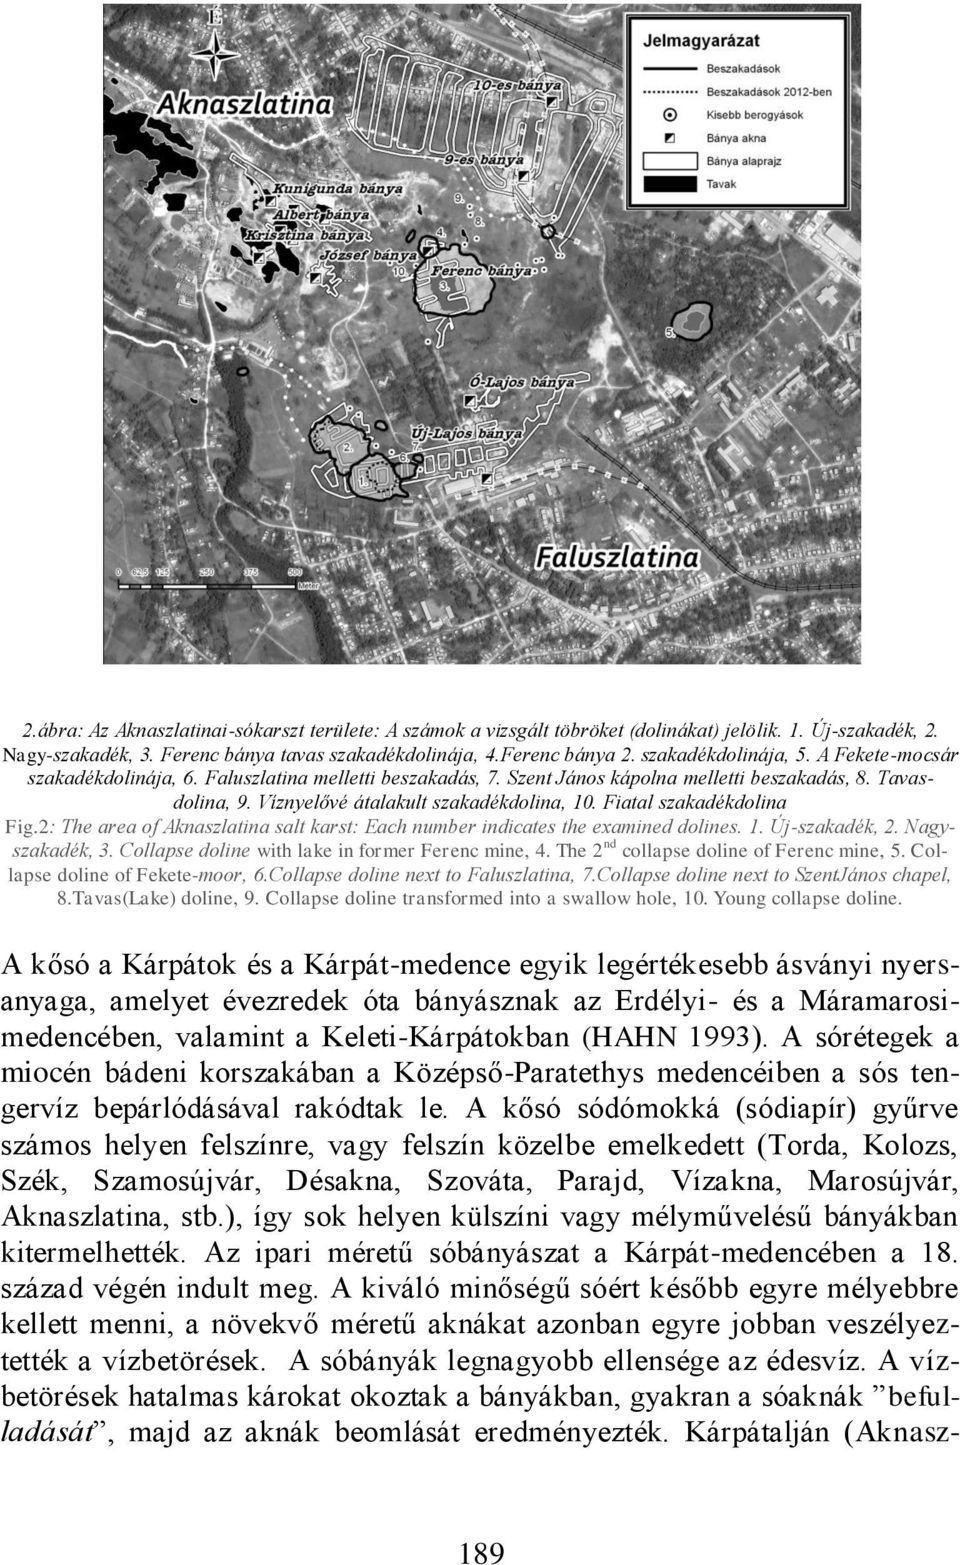 Fiatal szakadékdolina Fig.2: The area of Aknaszlatina salt karst: Each number indicates the examined dolines. 1. Új-szakadék, 2. Nagyszakadék, 3. Collapse doline with lake in former Ferenc mine, 4.